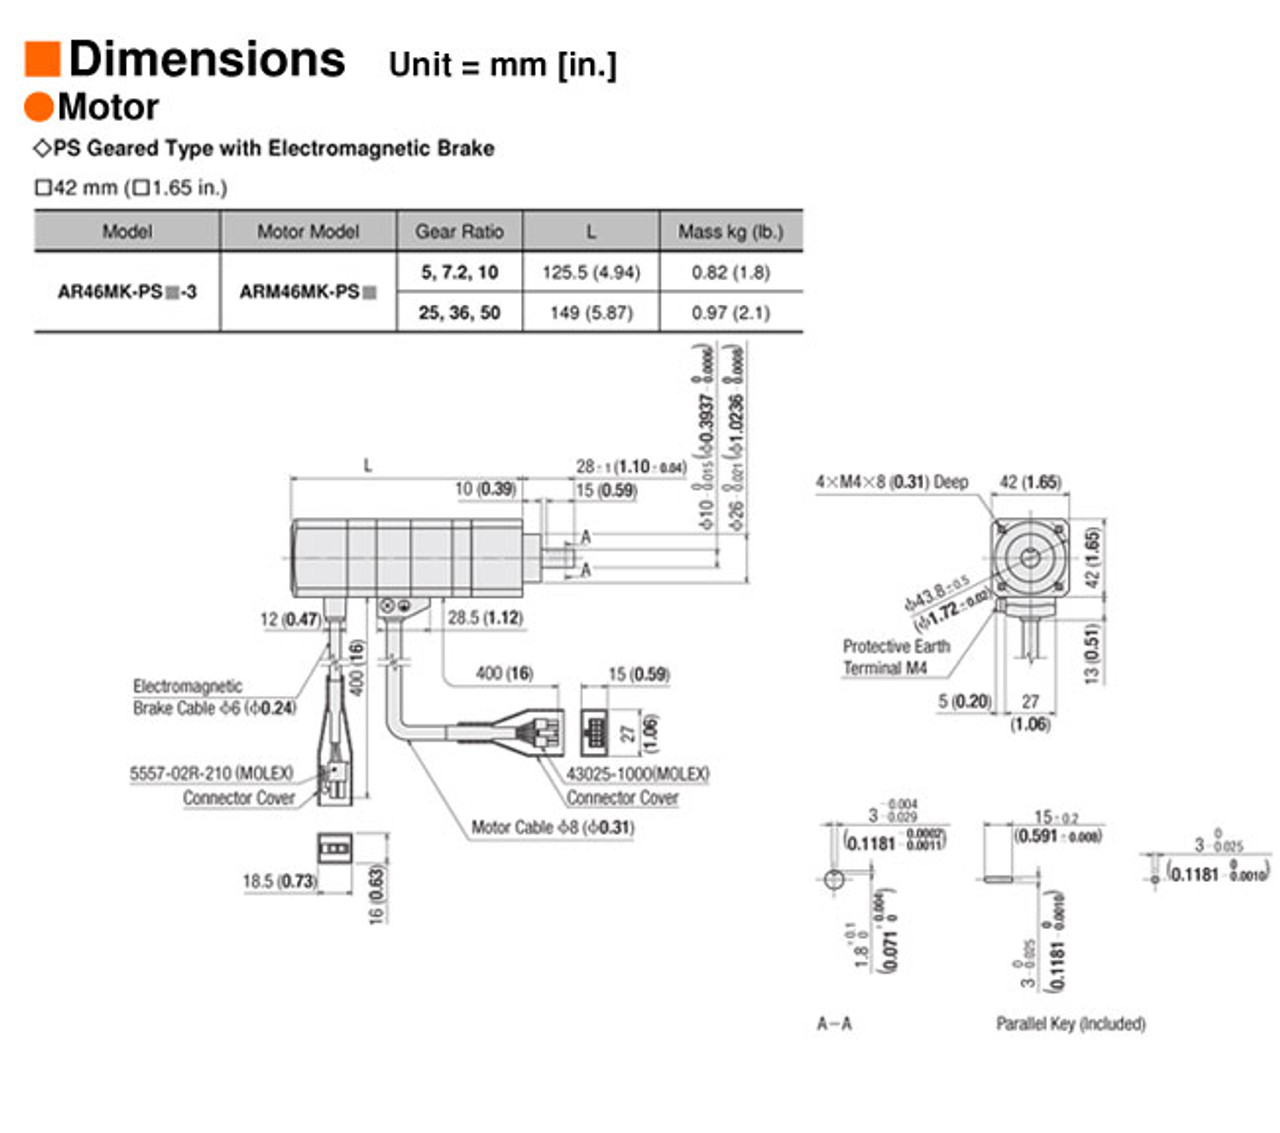 ARM46MK-PS50 - Dimensions